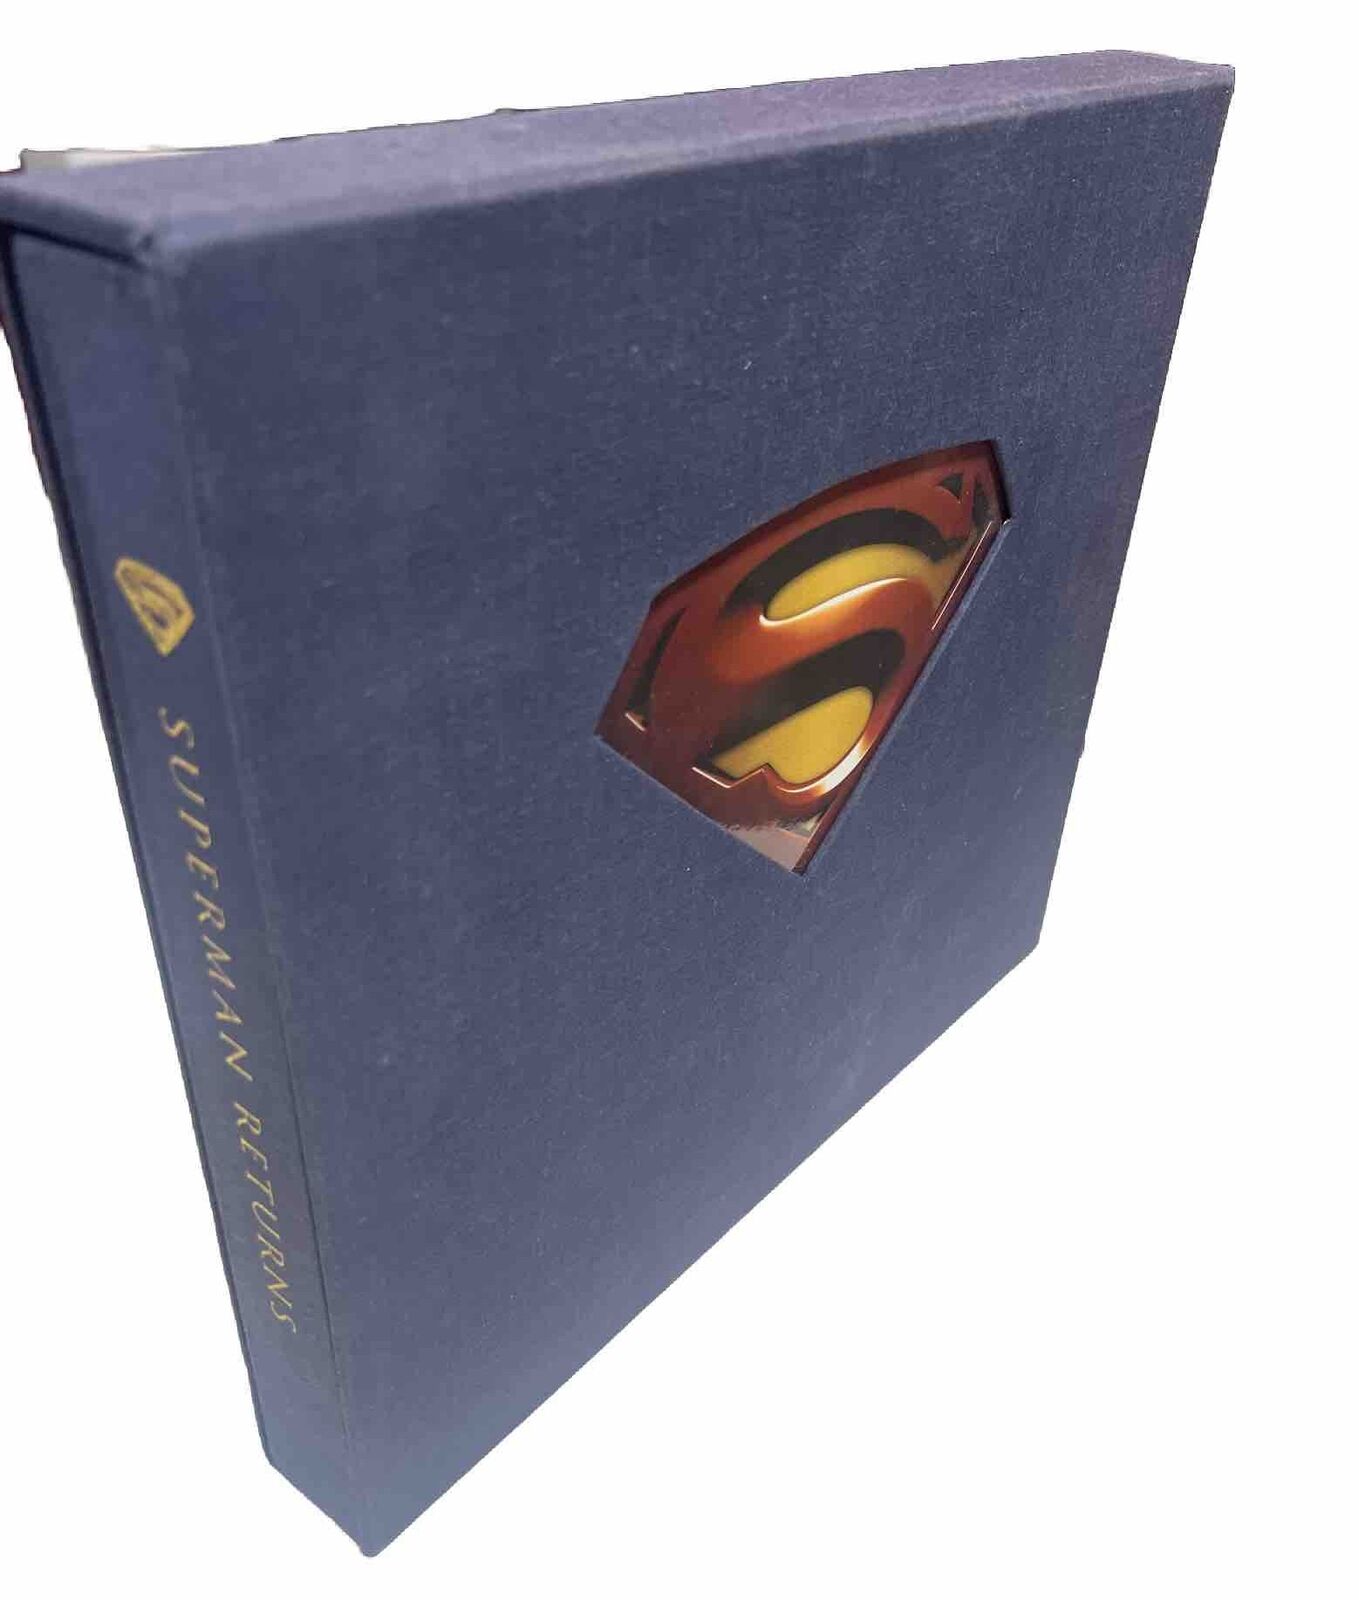 SUPERMAN RETURNS w/slipcover Giant  Photo hardcover book David James  2006